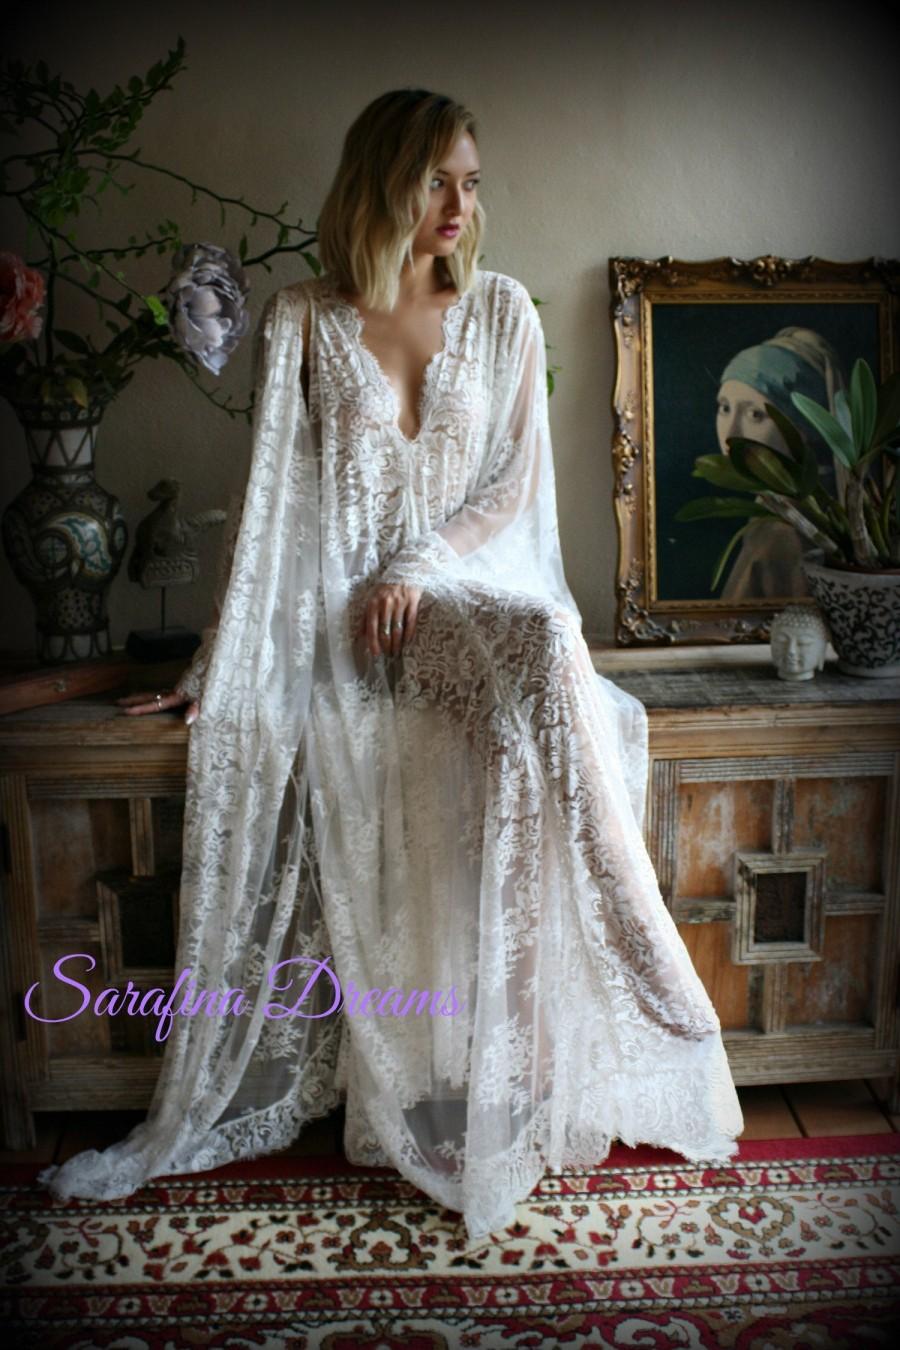 Wedding - Bridal Lace Wedding Robe Bridal Lingerie Wedding Sleepwear Off White Lace Lingerie Bridal Robe Honeymoon Lingerie